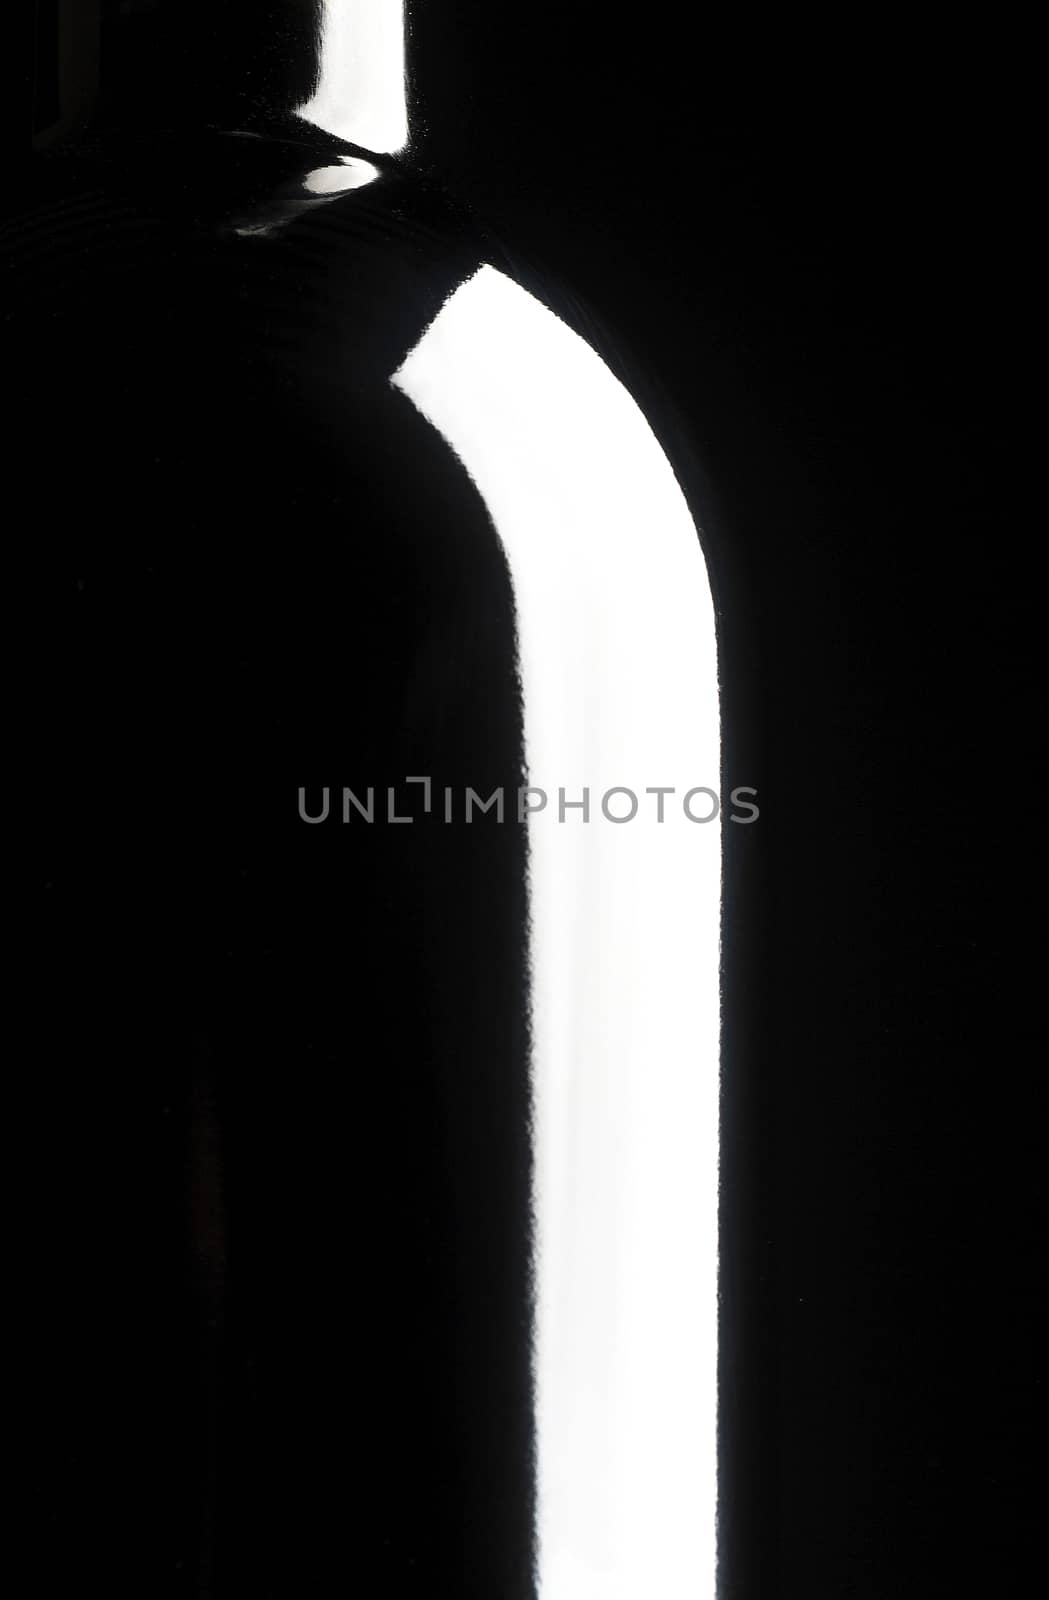 Silhouette of wine bottle, black background